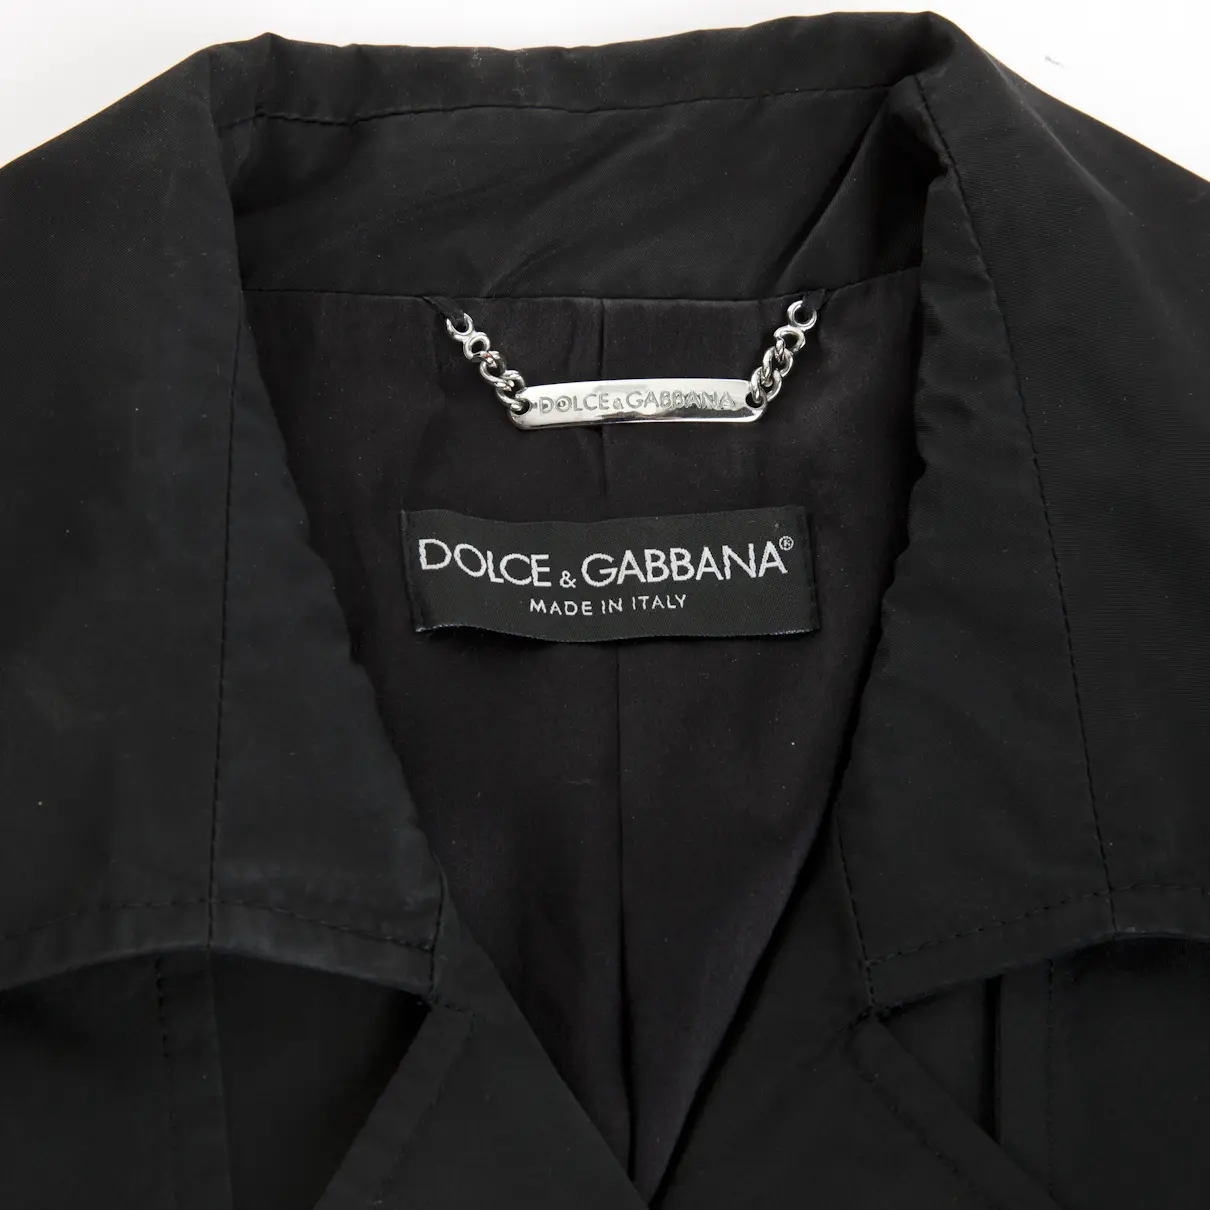 Buy Dolce & Gabbana RAINCOAT online